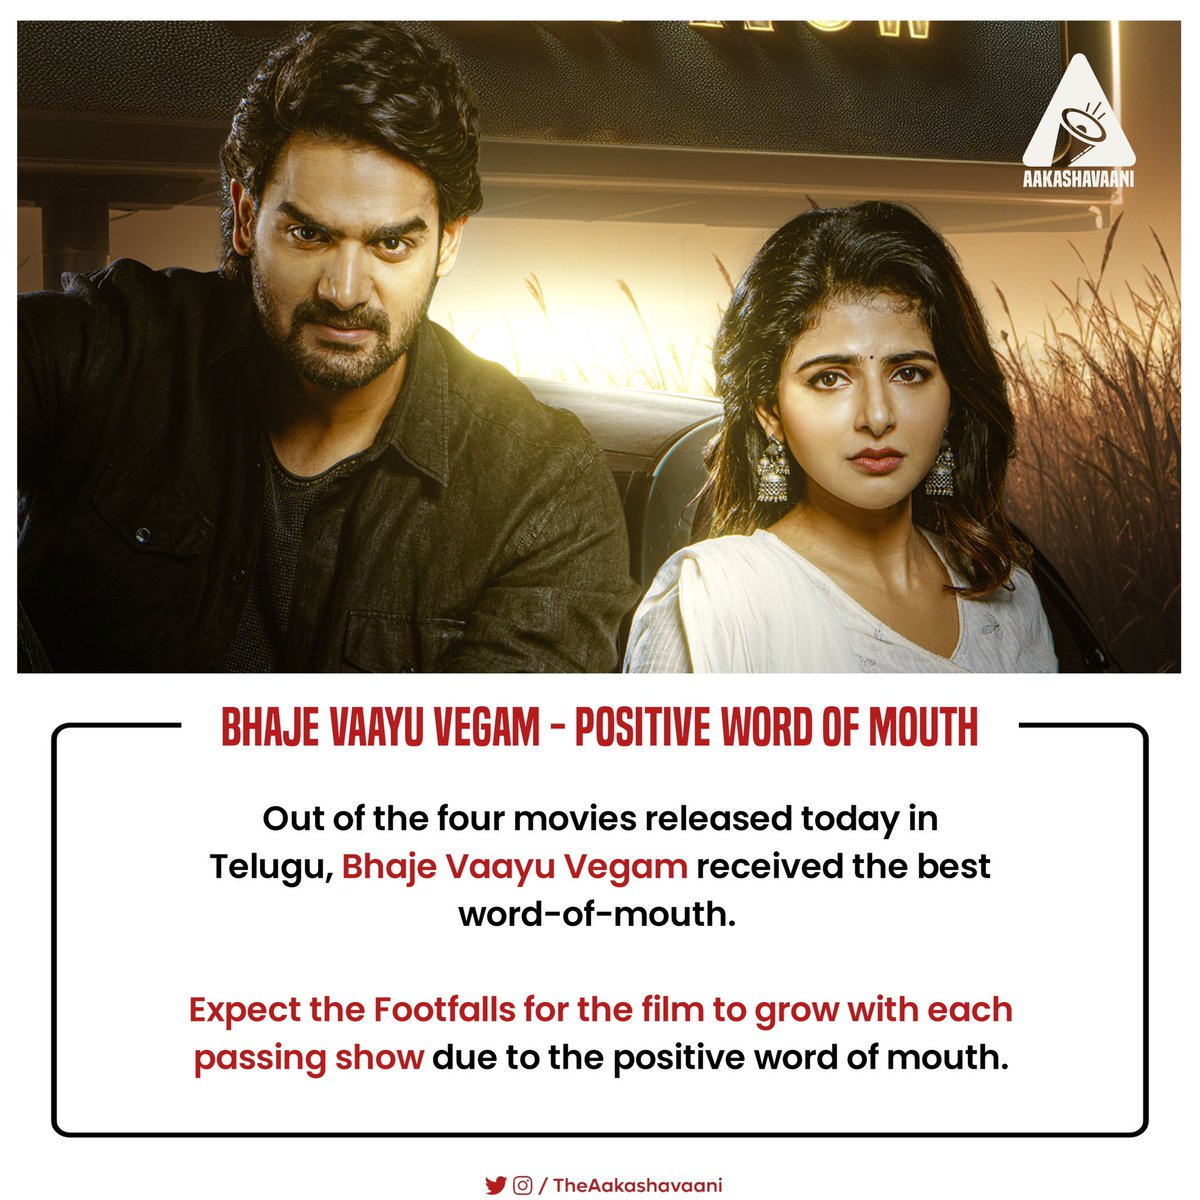 #BhajeVaayuVegam - Positive Word of Mouth